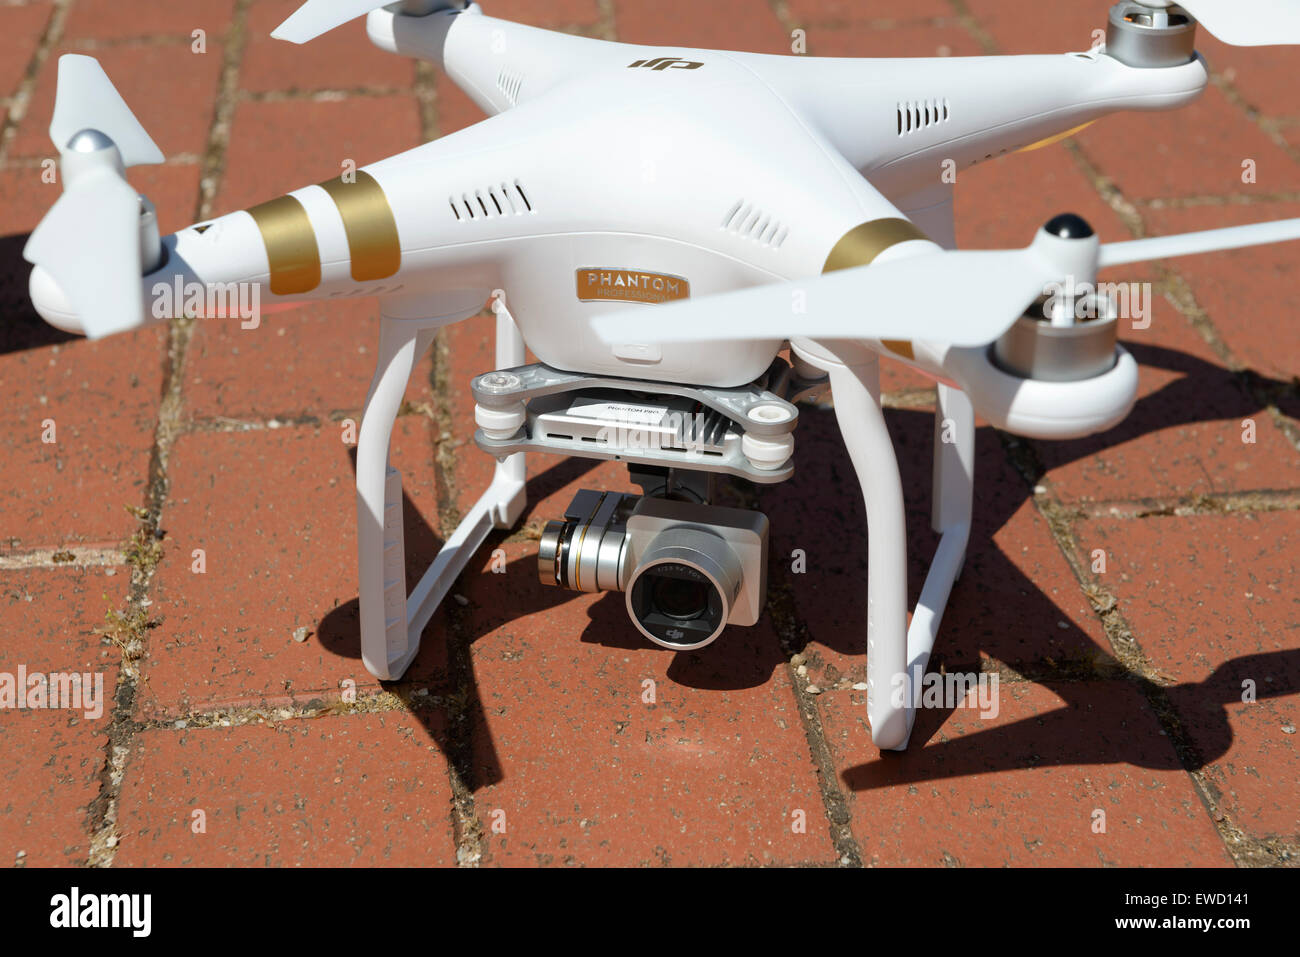 DJI Phantom 3 Professional RC quadcopter drone Stock Photo - Alamy